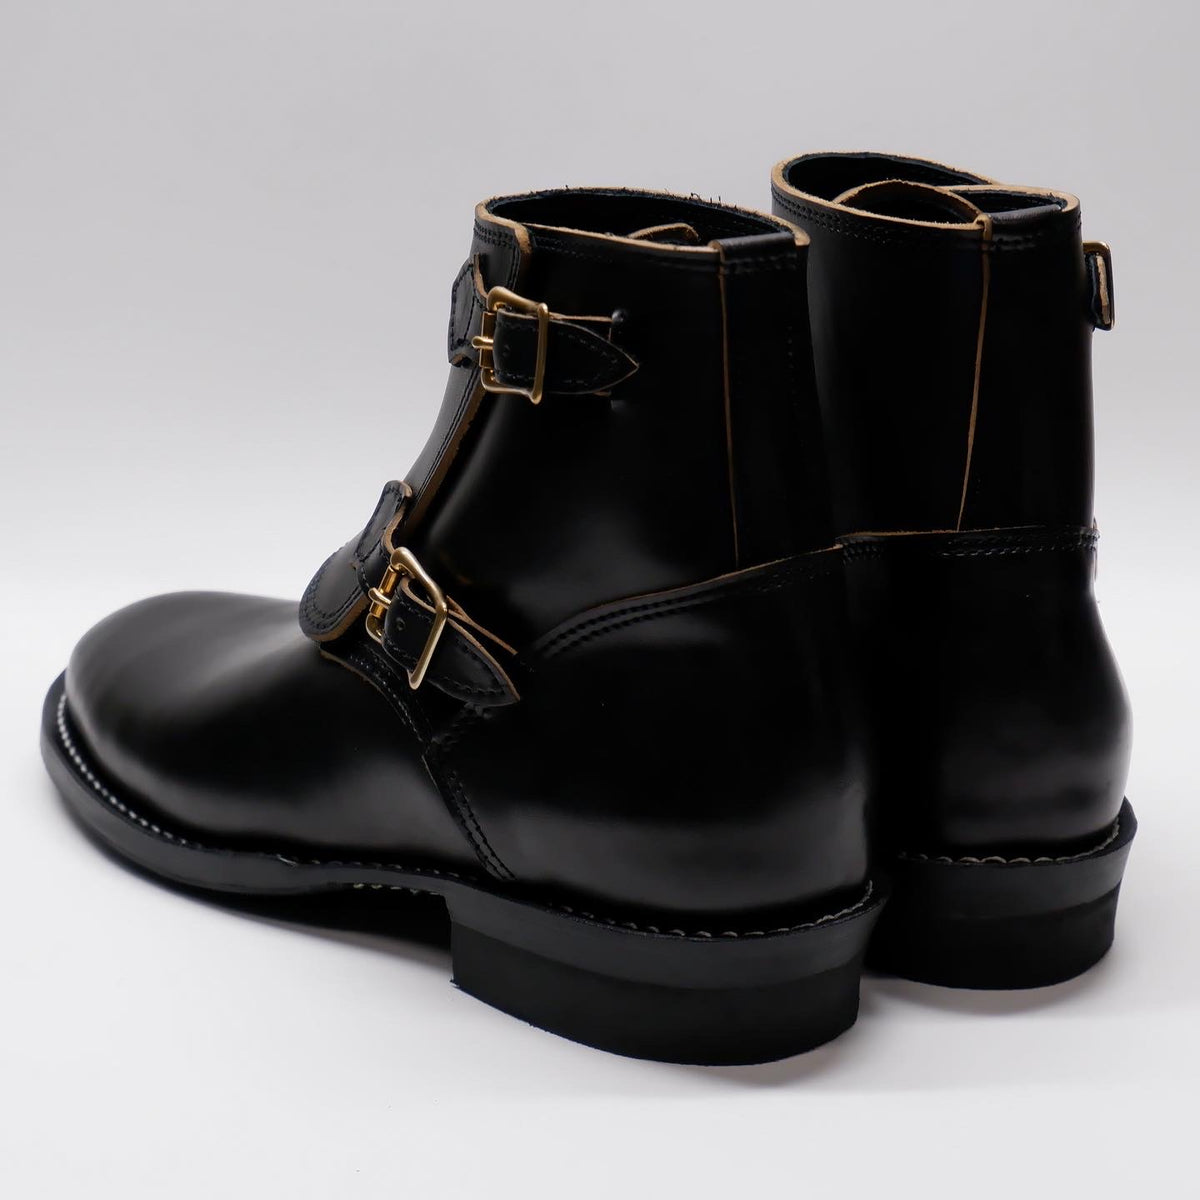 Double Monk Boots “GYPSYS” – Argo